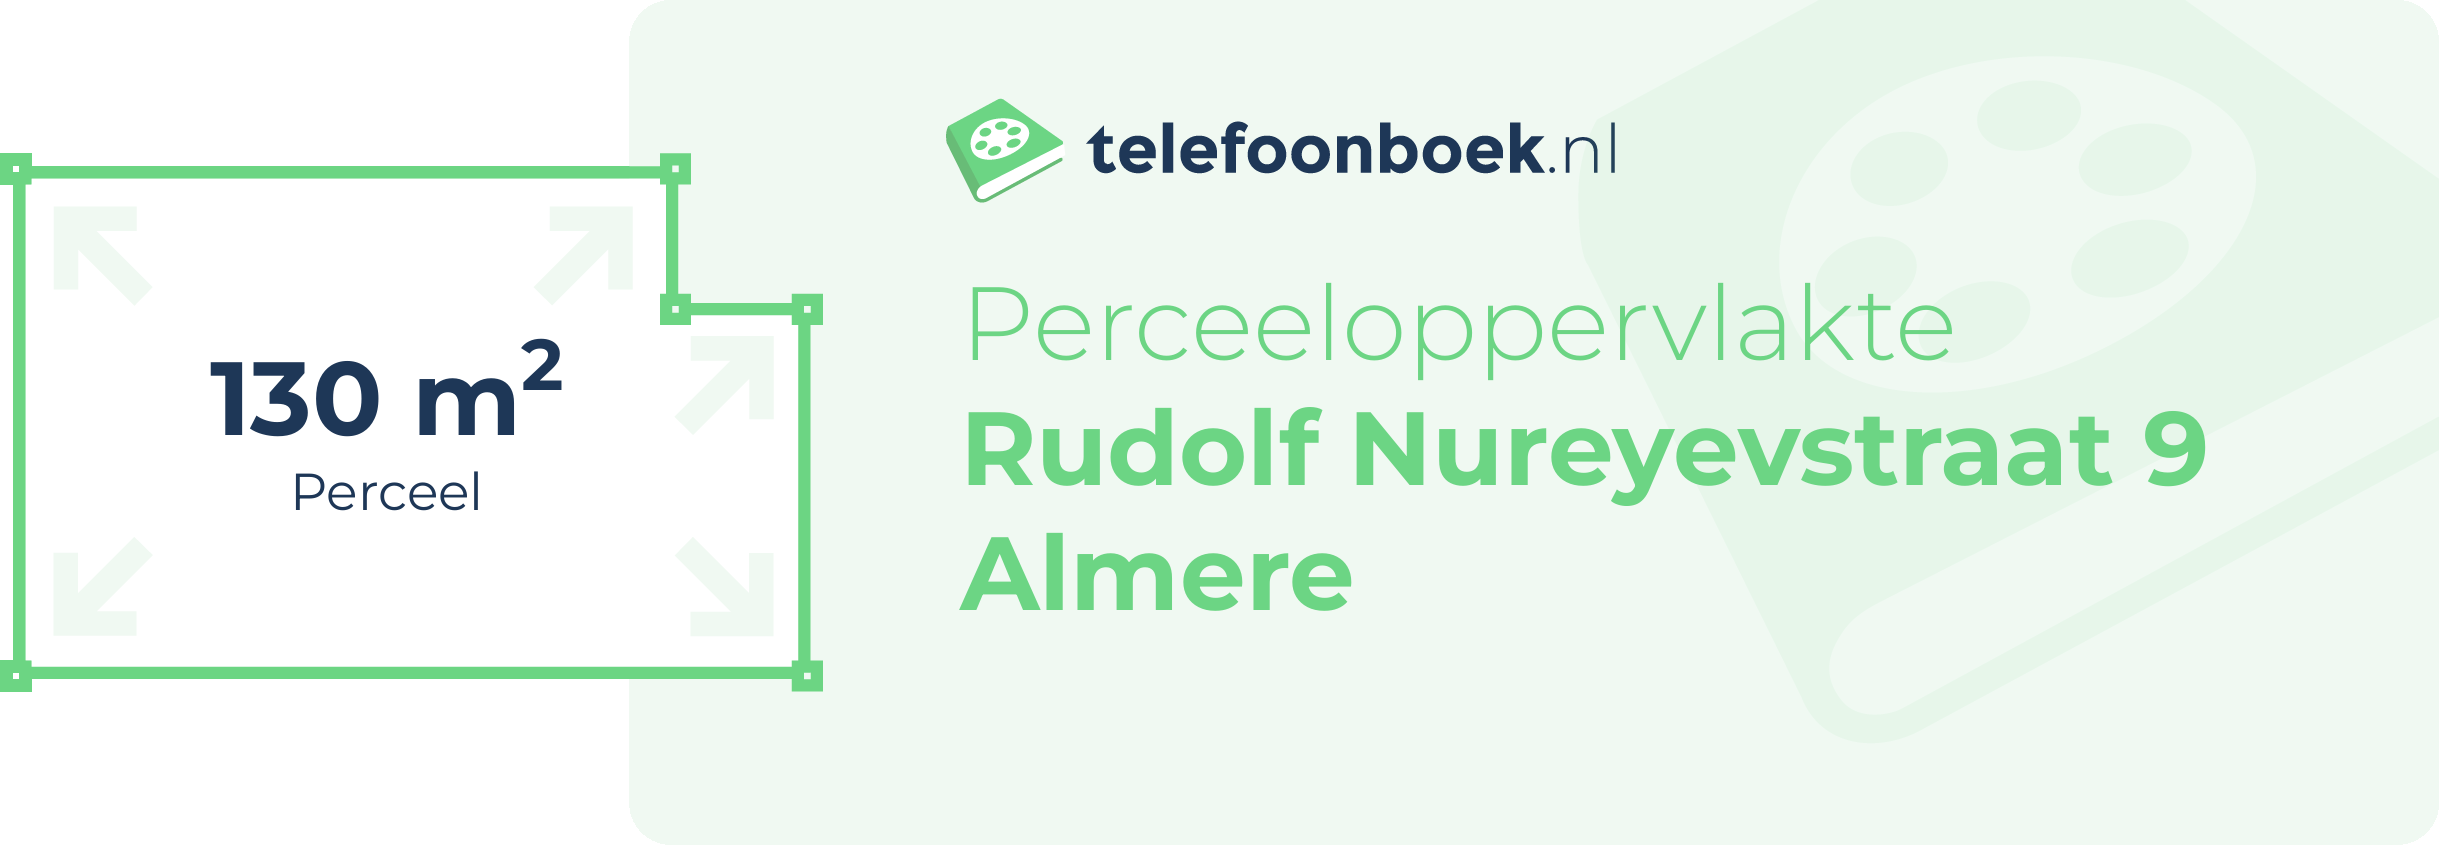 Perceeloppervlakte Rudolf Nureyevstraat 9 Almere